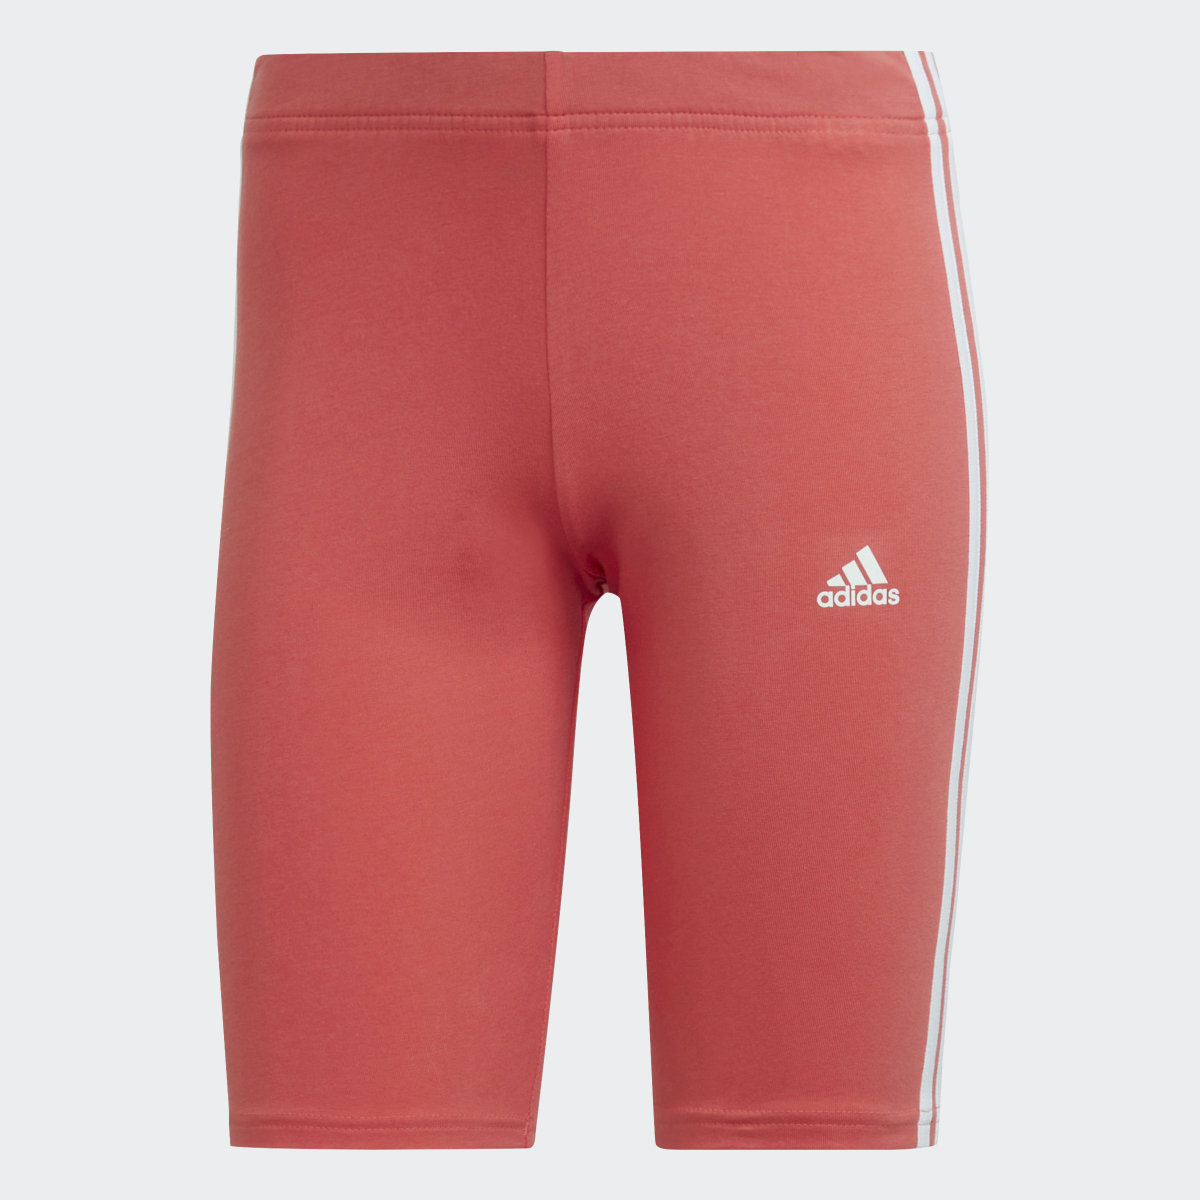 Adidas Essentials 3-Stripes Bike Shorts. 4